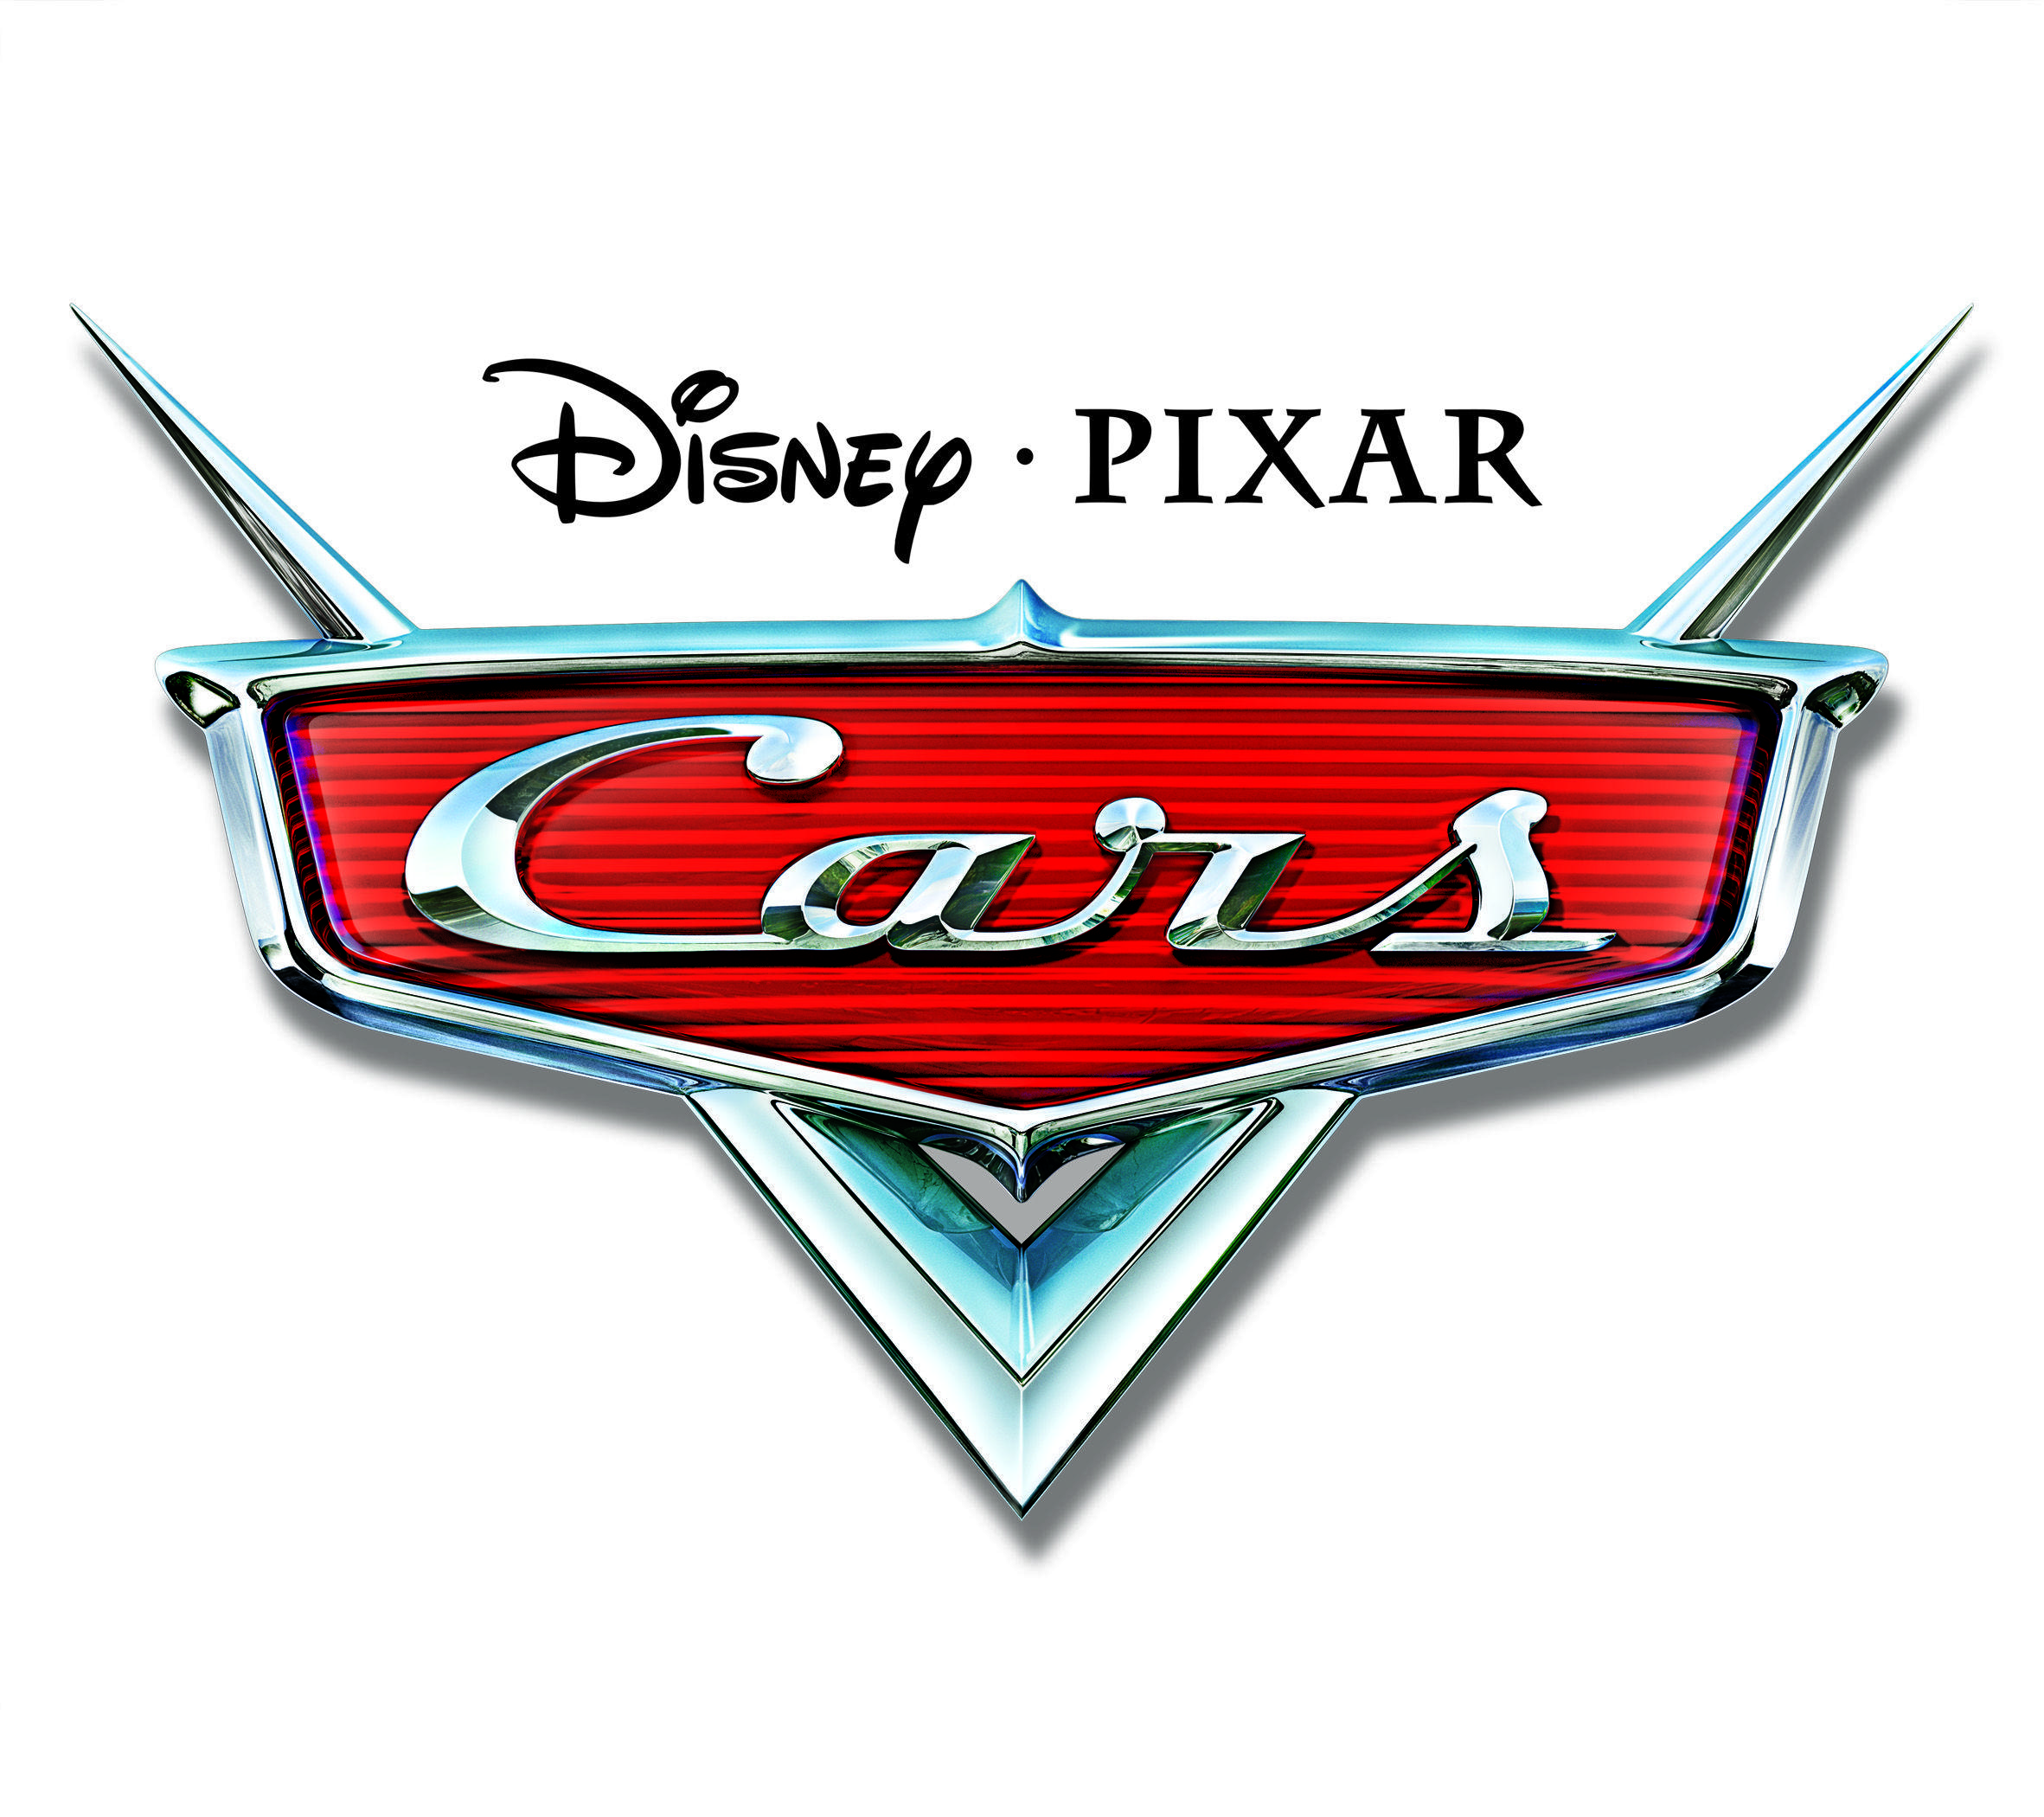 Disney Pixar Movie Logo - Disney Pixar Cars Movie Logo free image